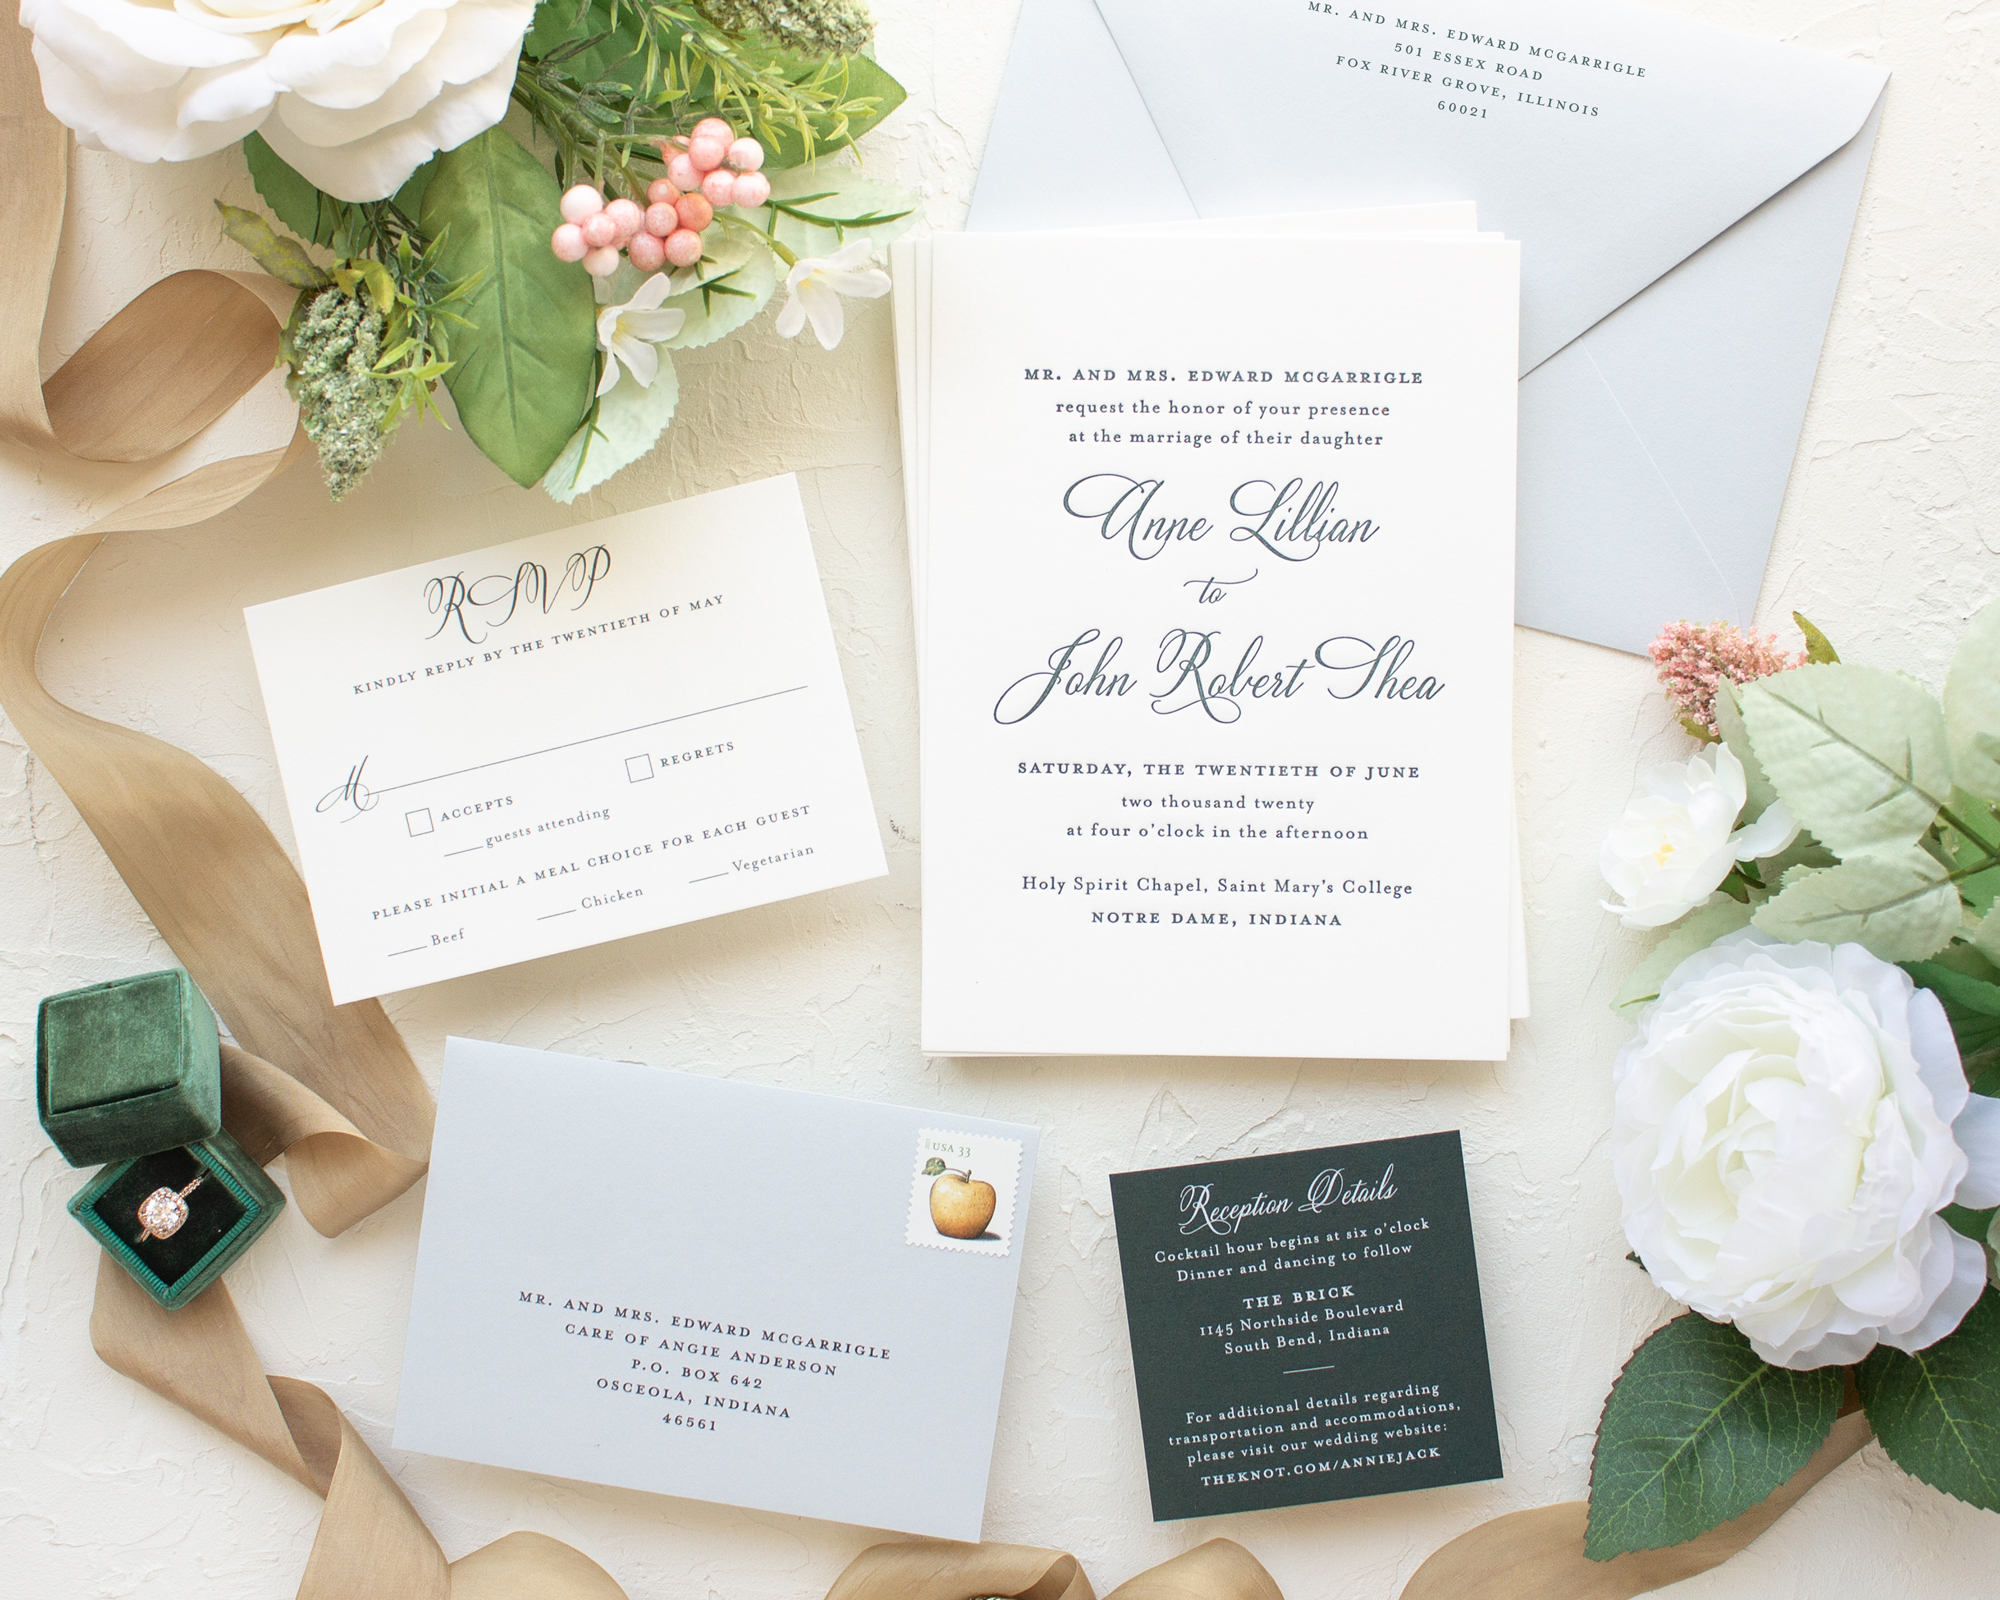 Custom invitations for Notre Dame weddings